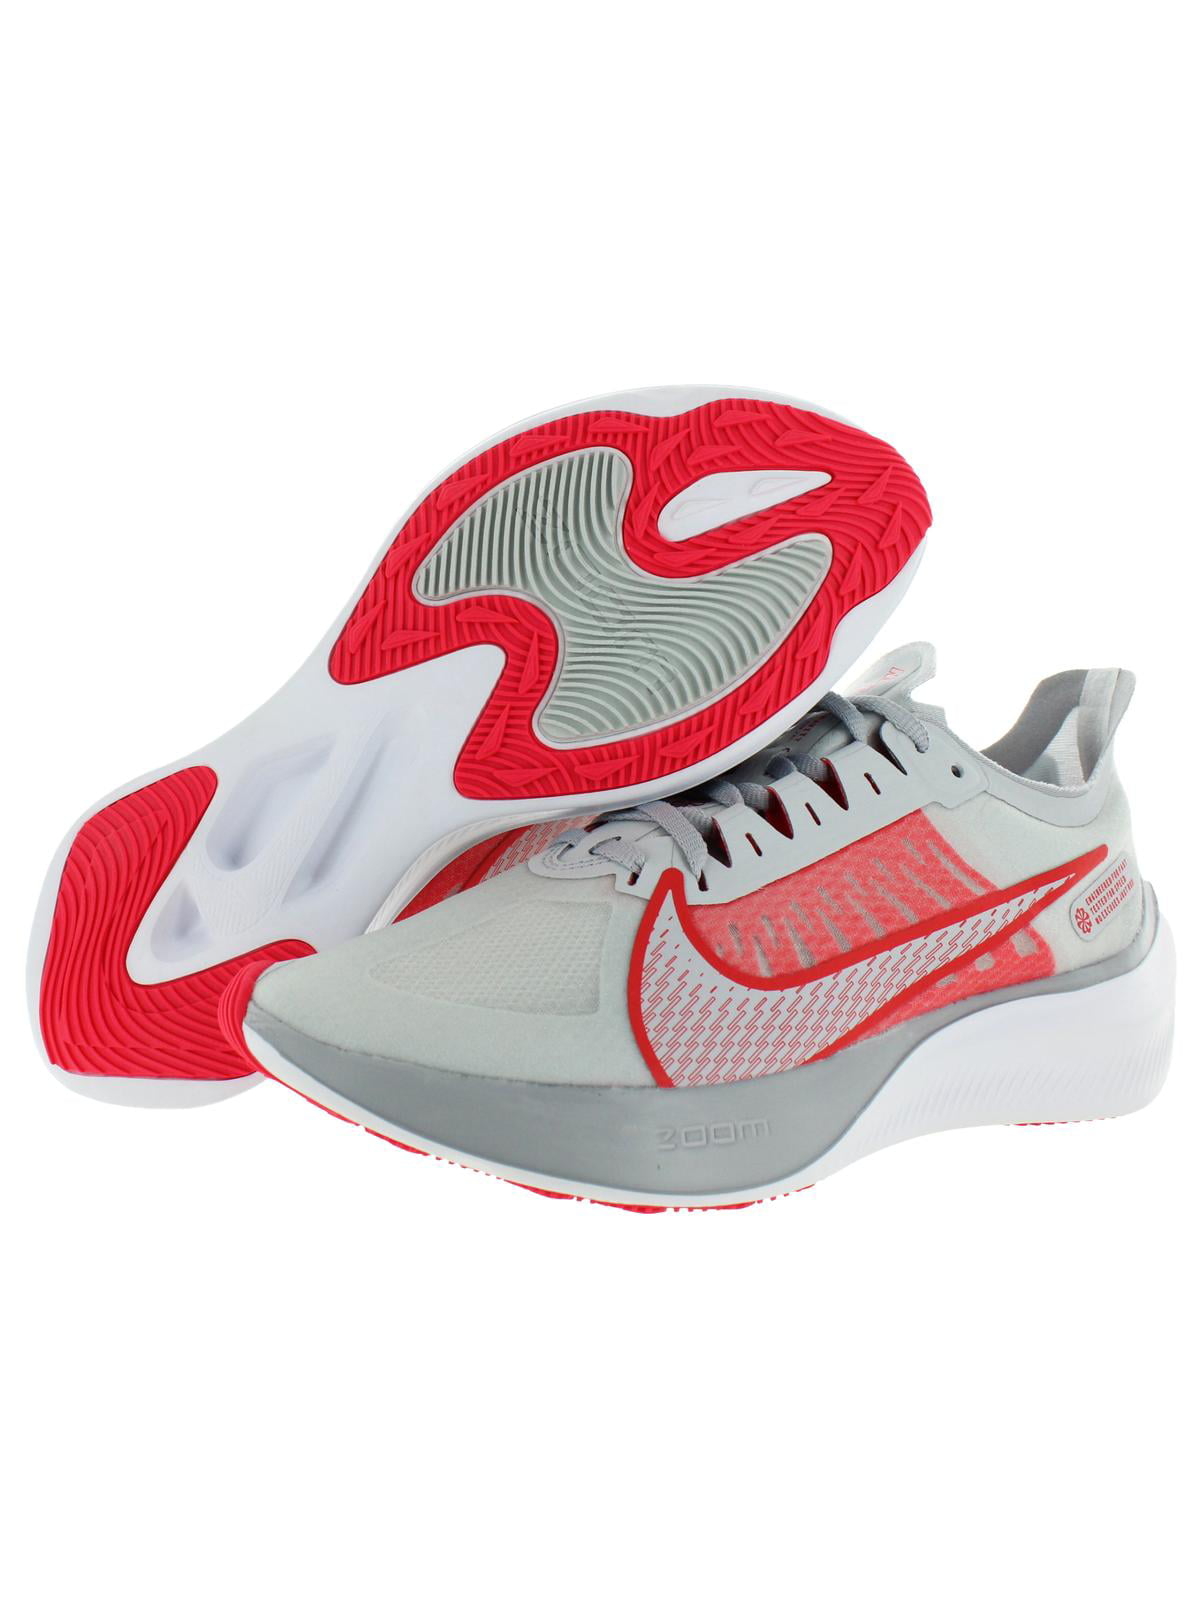 afijo Variedad calcio Nike Women's Zoom Gravity Pure Platinum / White Red Orbit Ankle-High Mesh  Running - 6M - Walmart.com